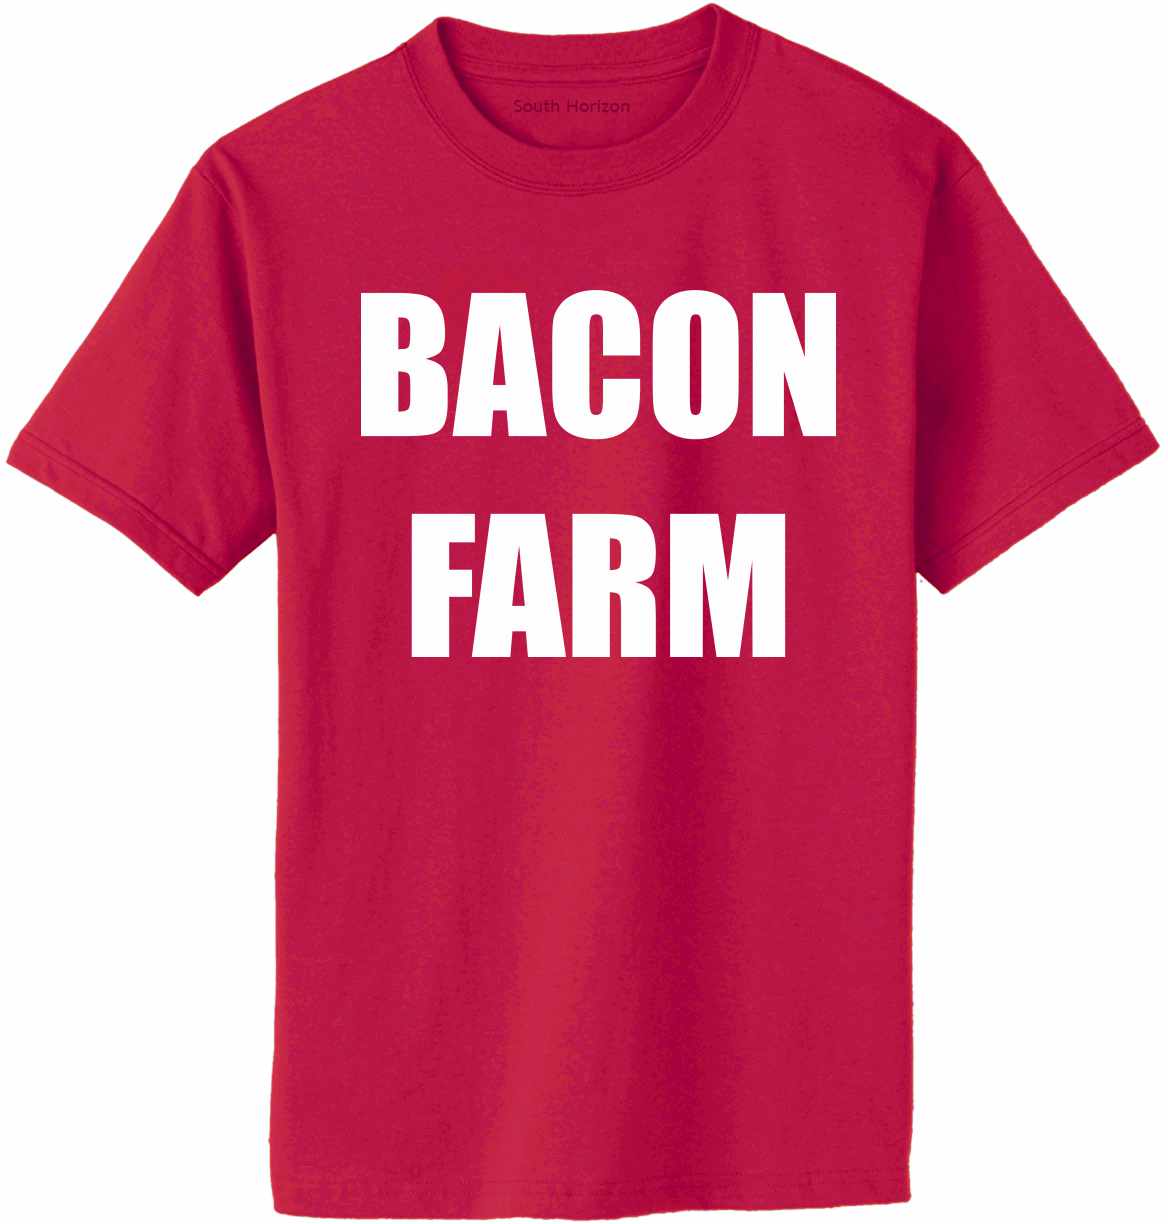 BACON FARM Adult T-Shirt